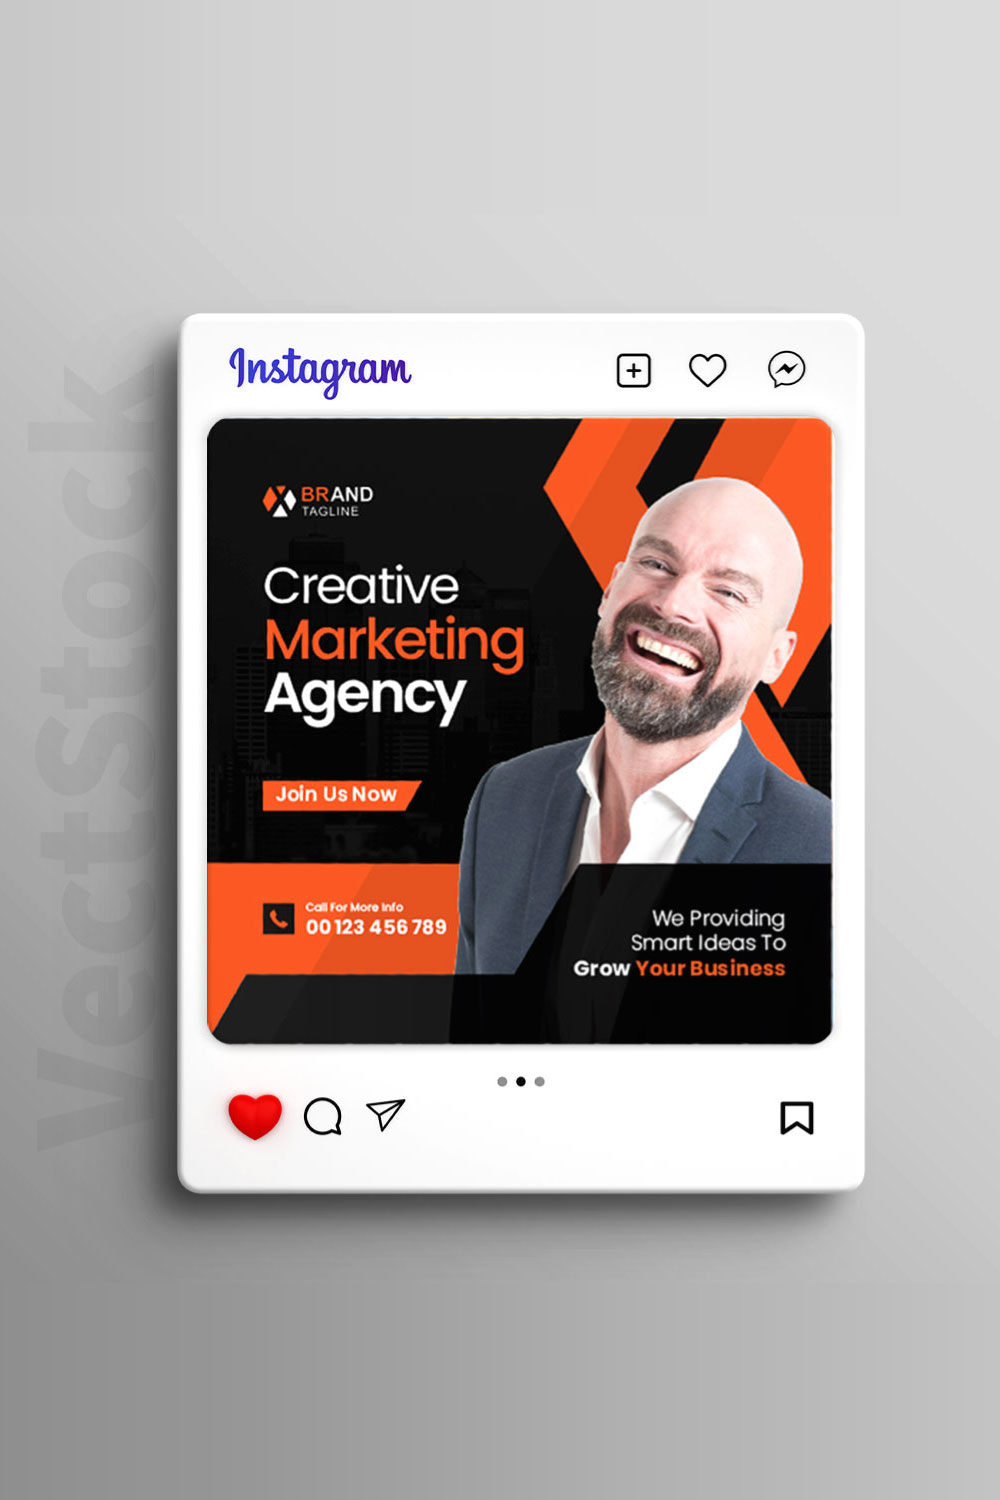 Digital marketing agency instagram post pinterest preview image.